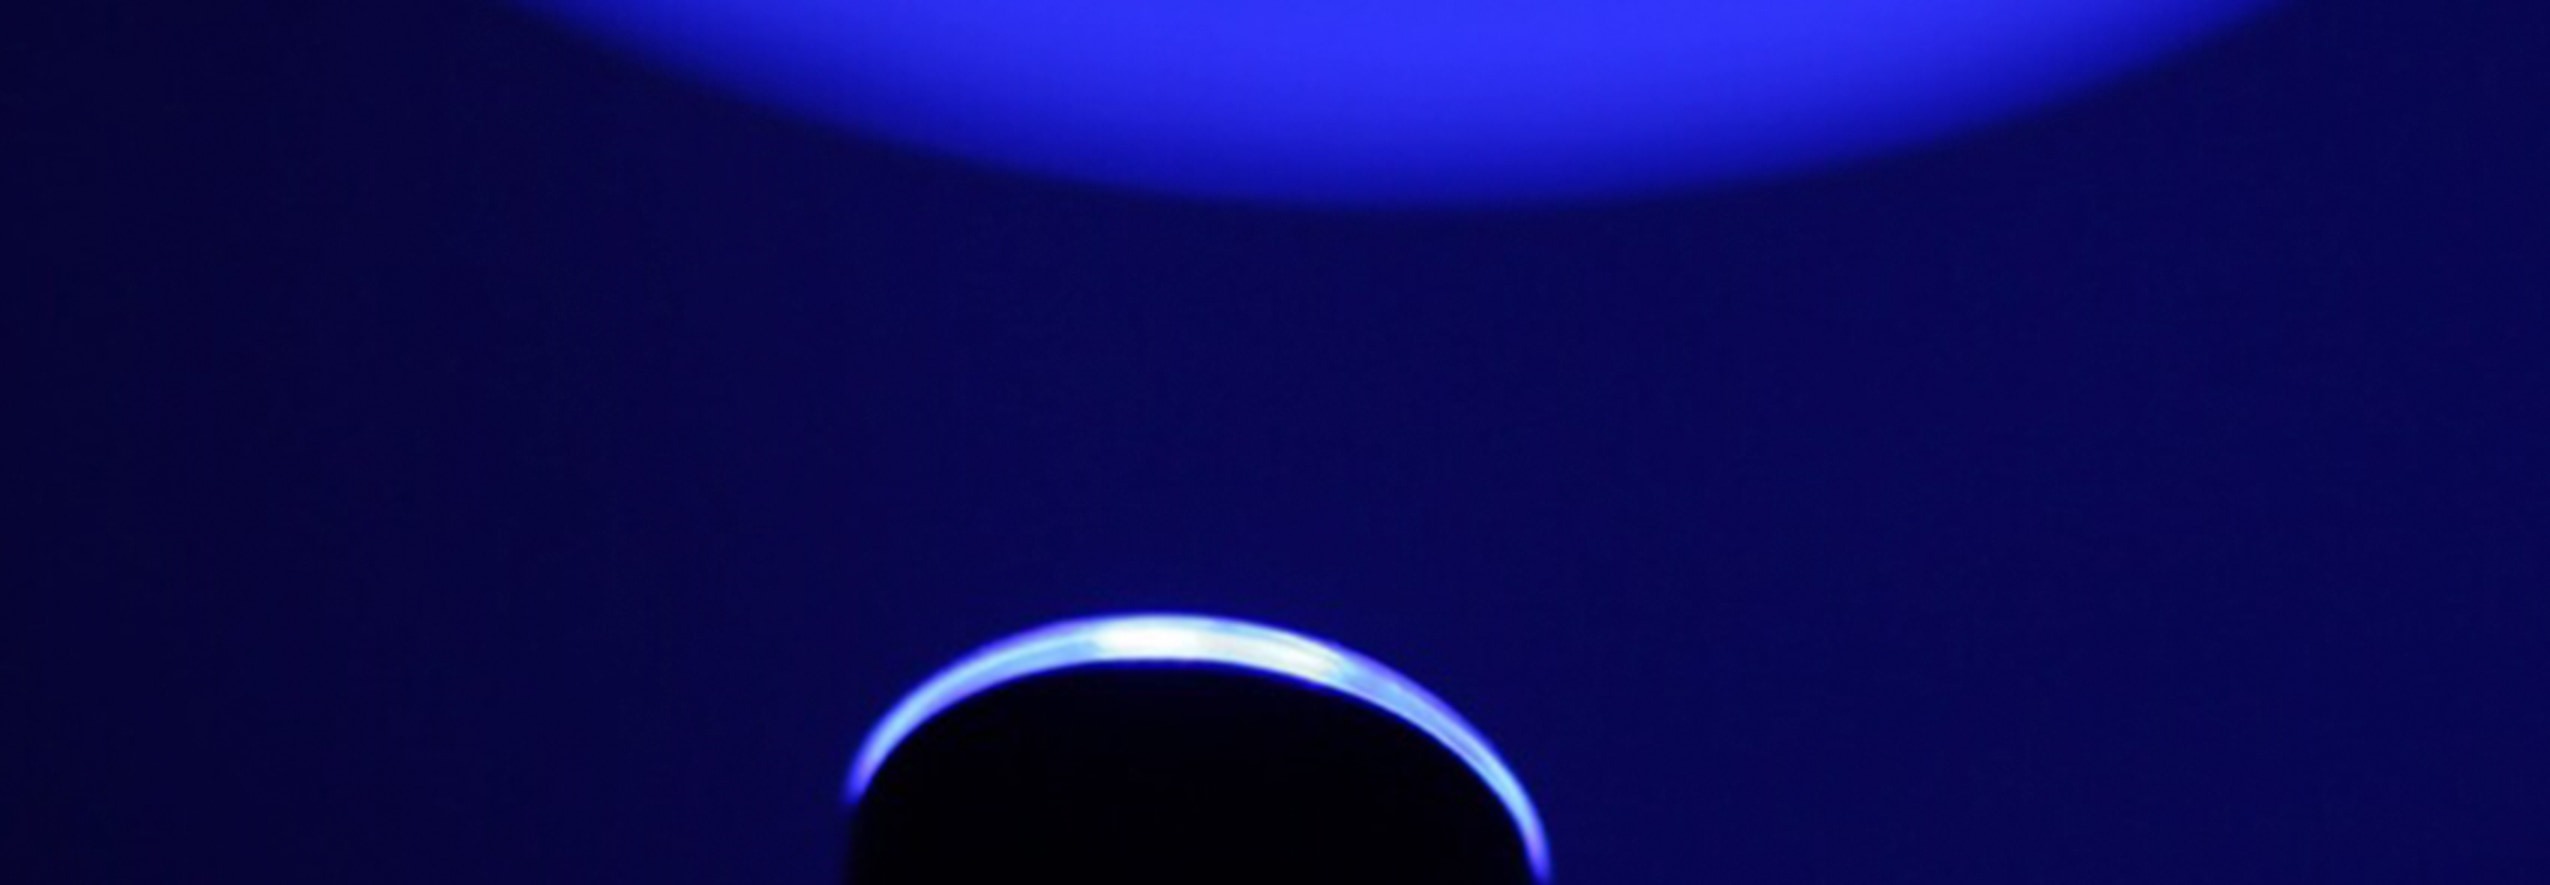 LYMA Laser blue light close-up